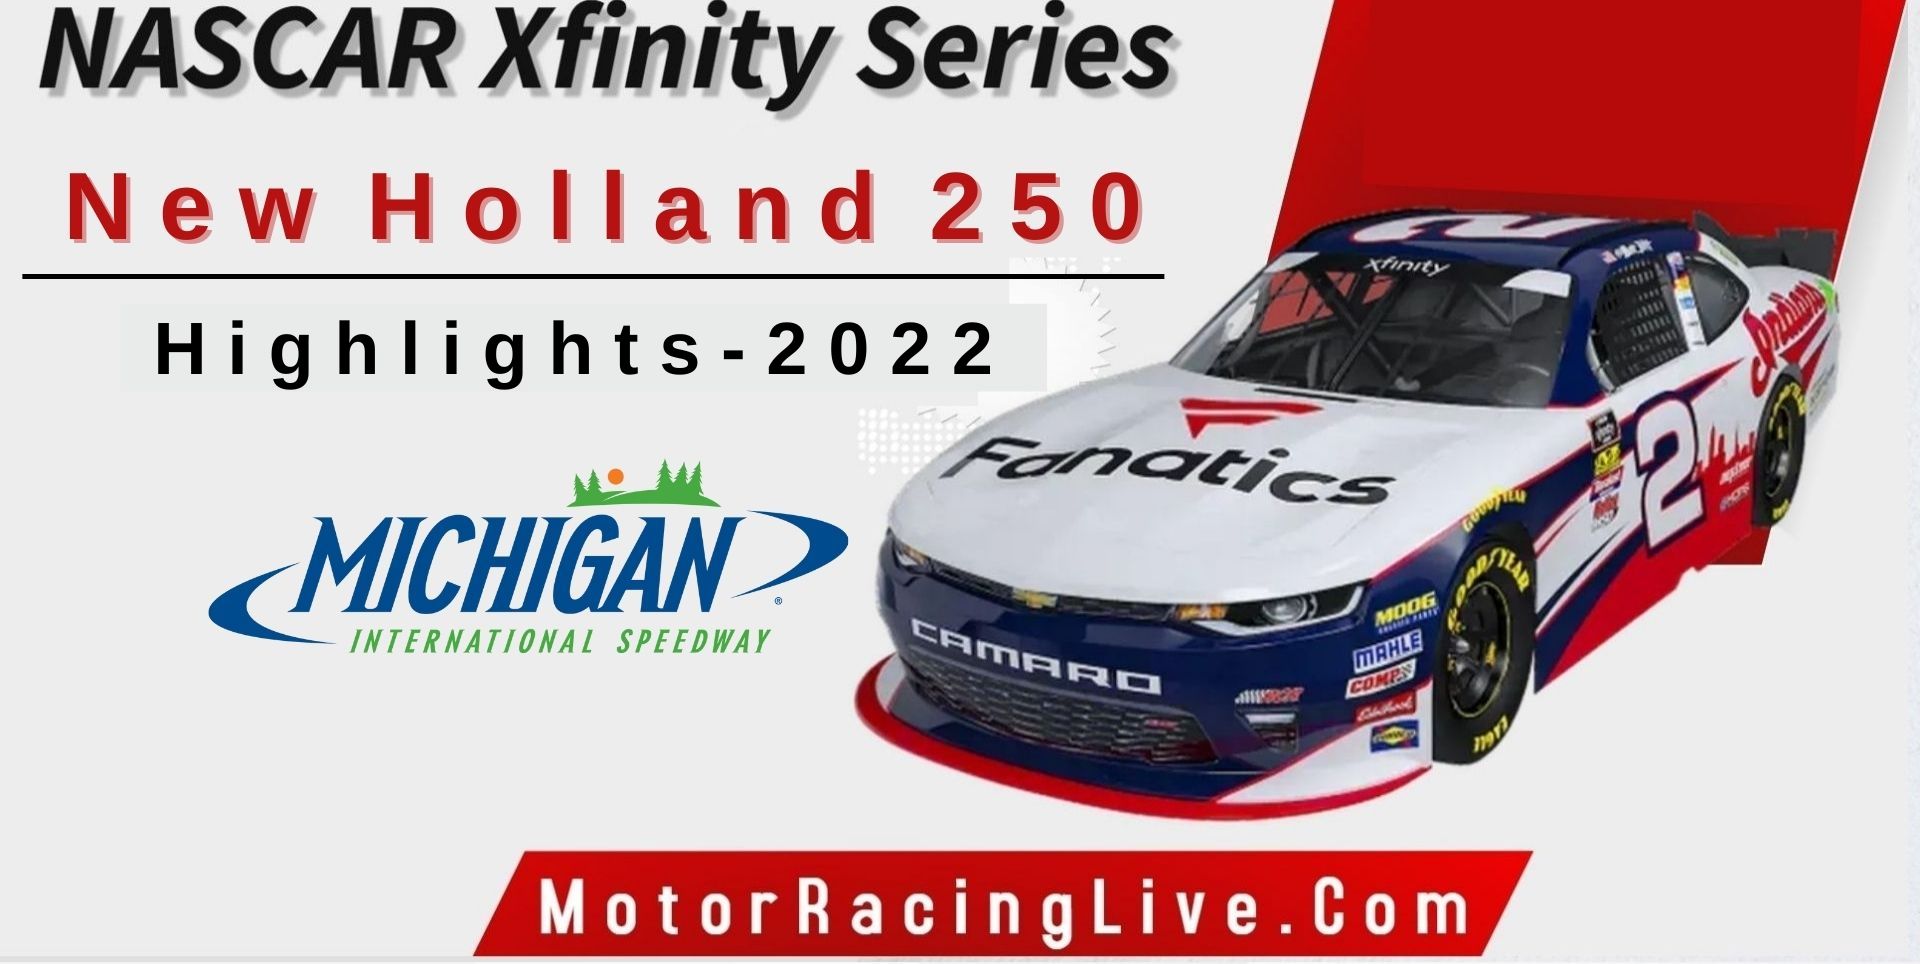 New Holland 250 Highlights 2022 NASCAR Xfinity Series